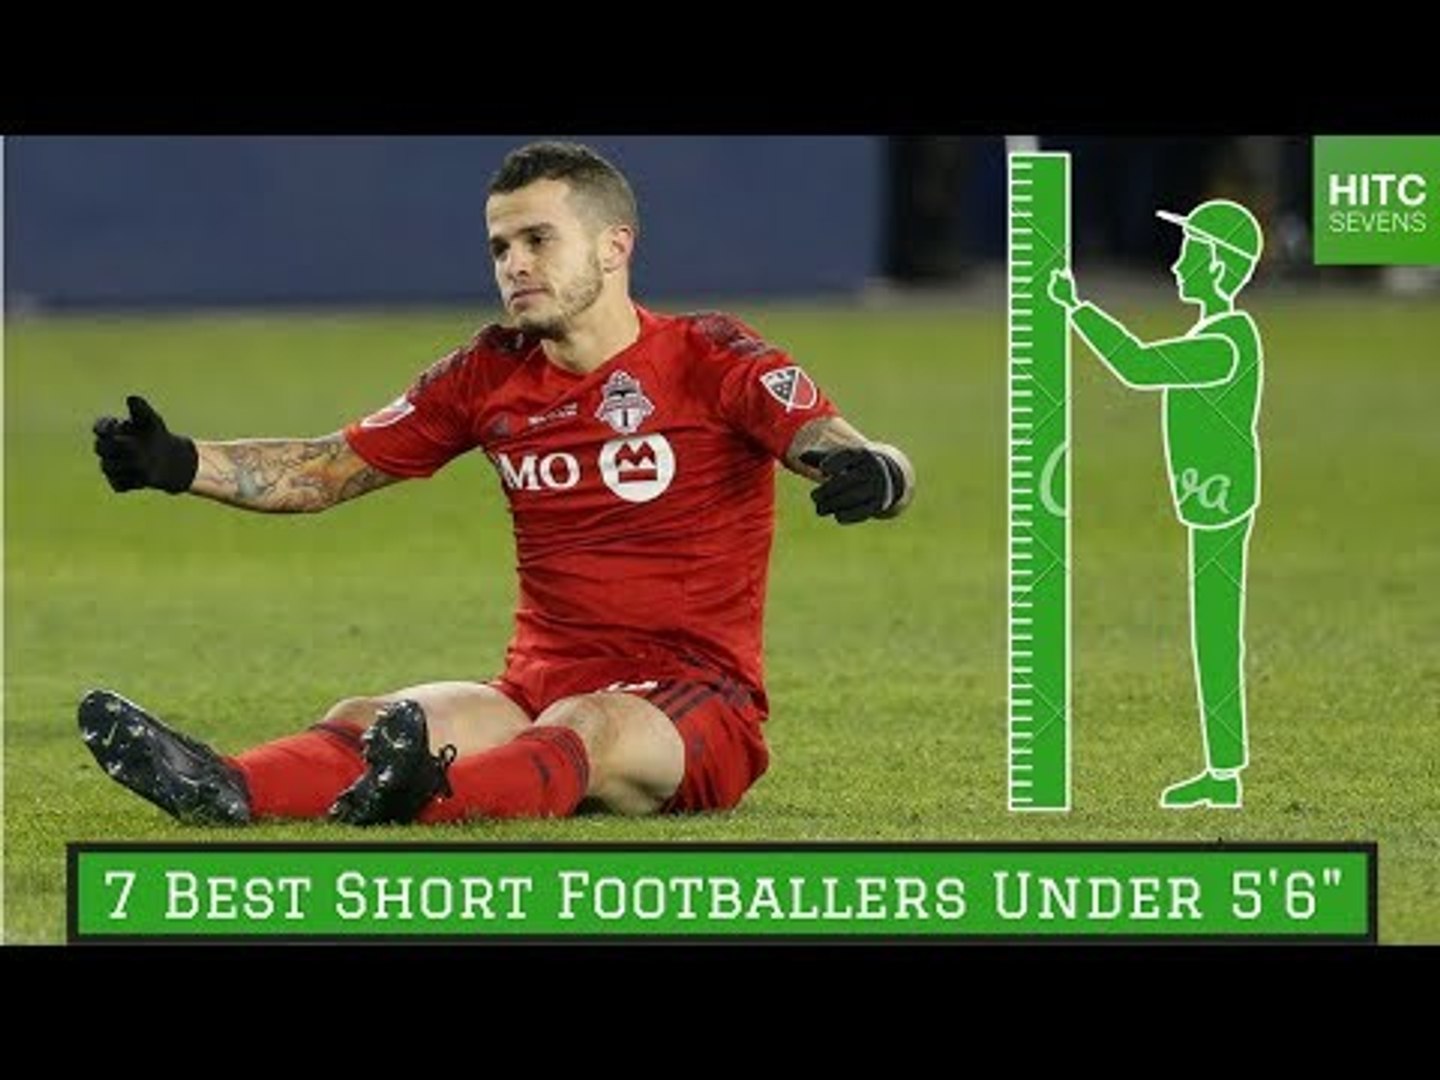 7 Best Short Footballers Under 5'6